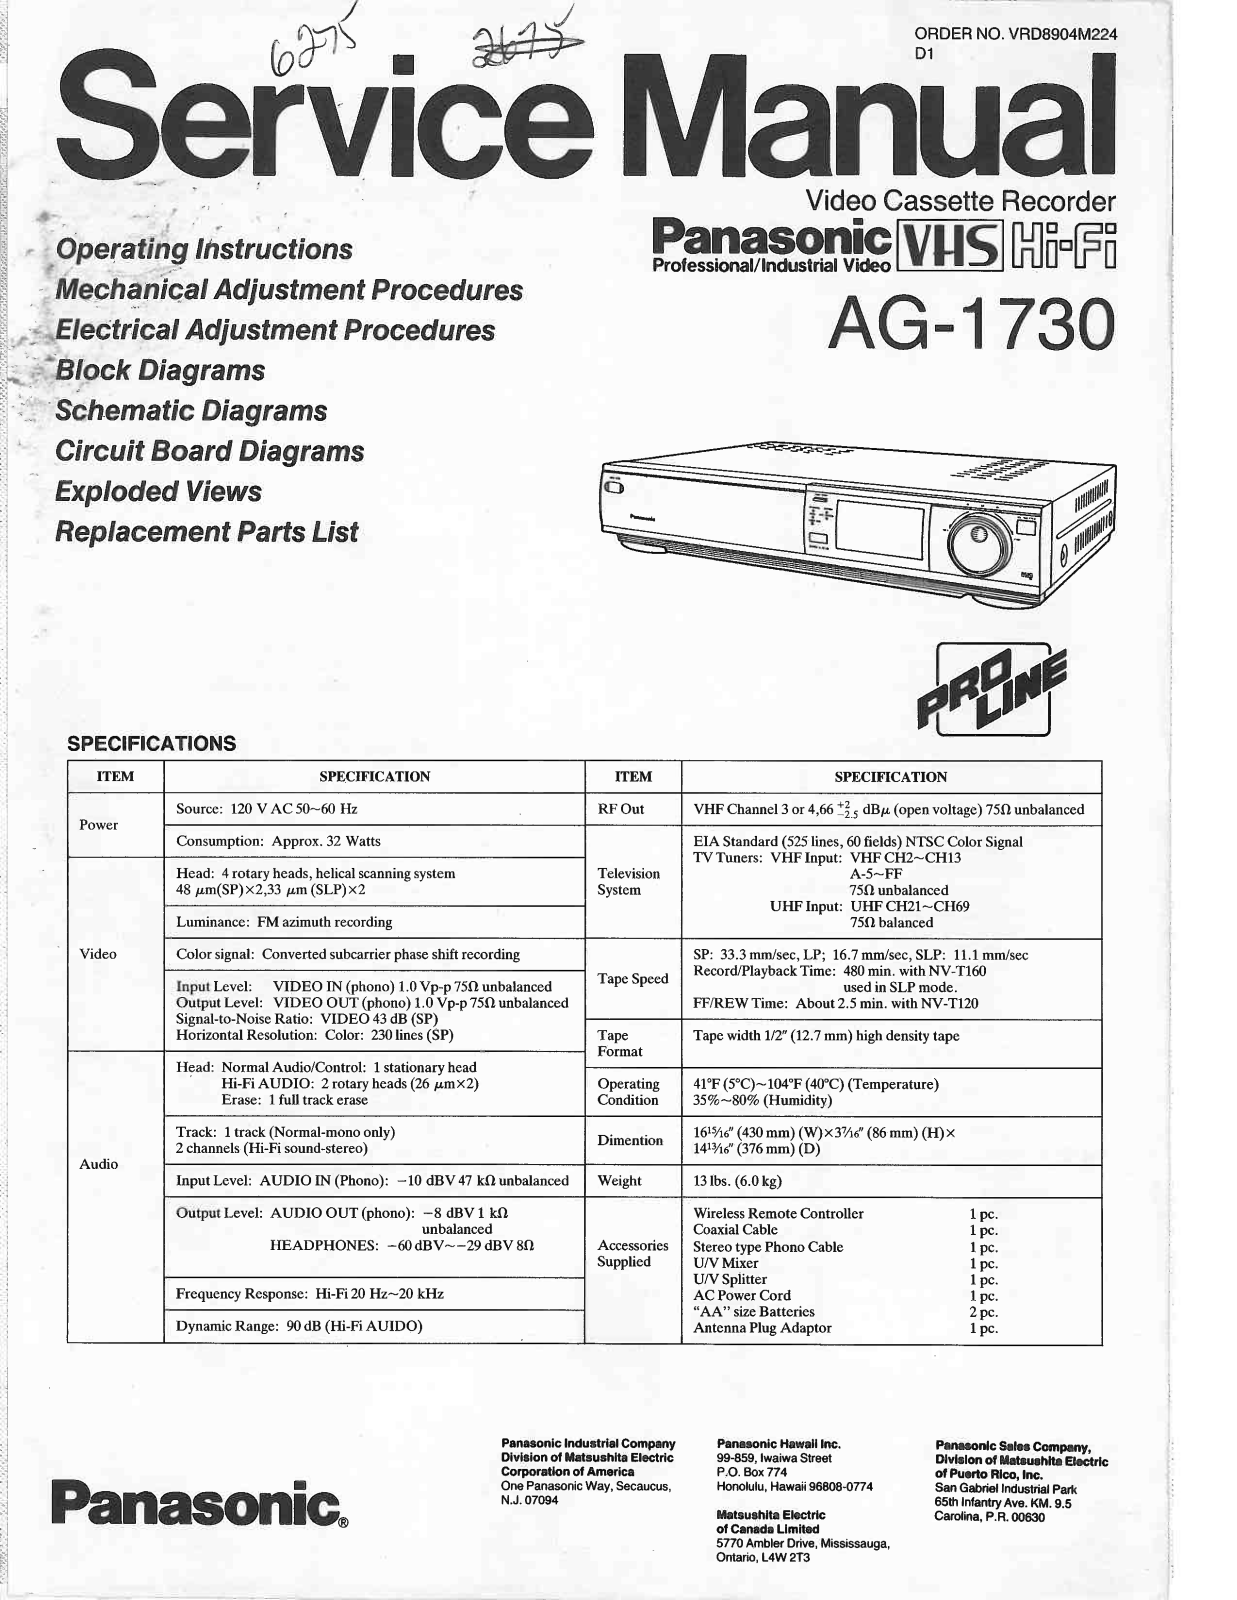 Panasonic ag 1730 Service Manual